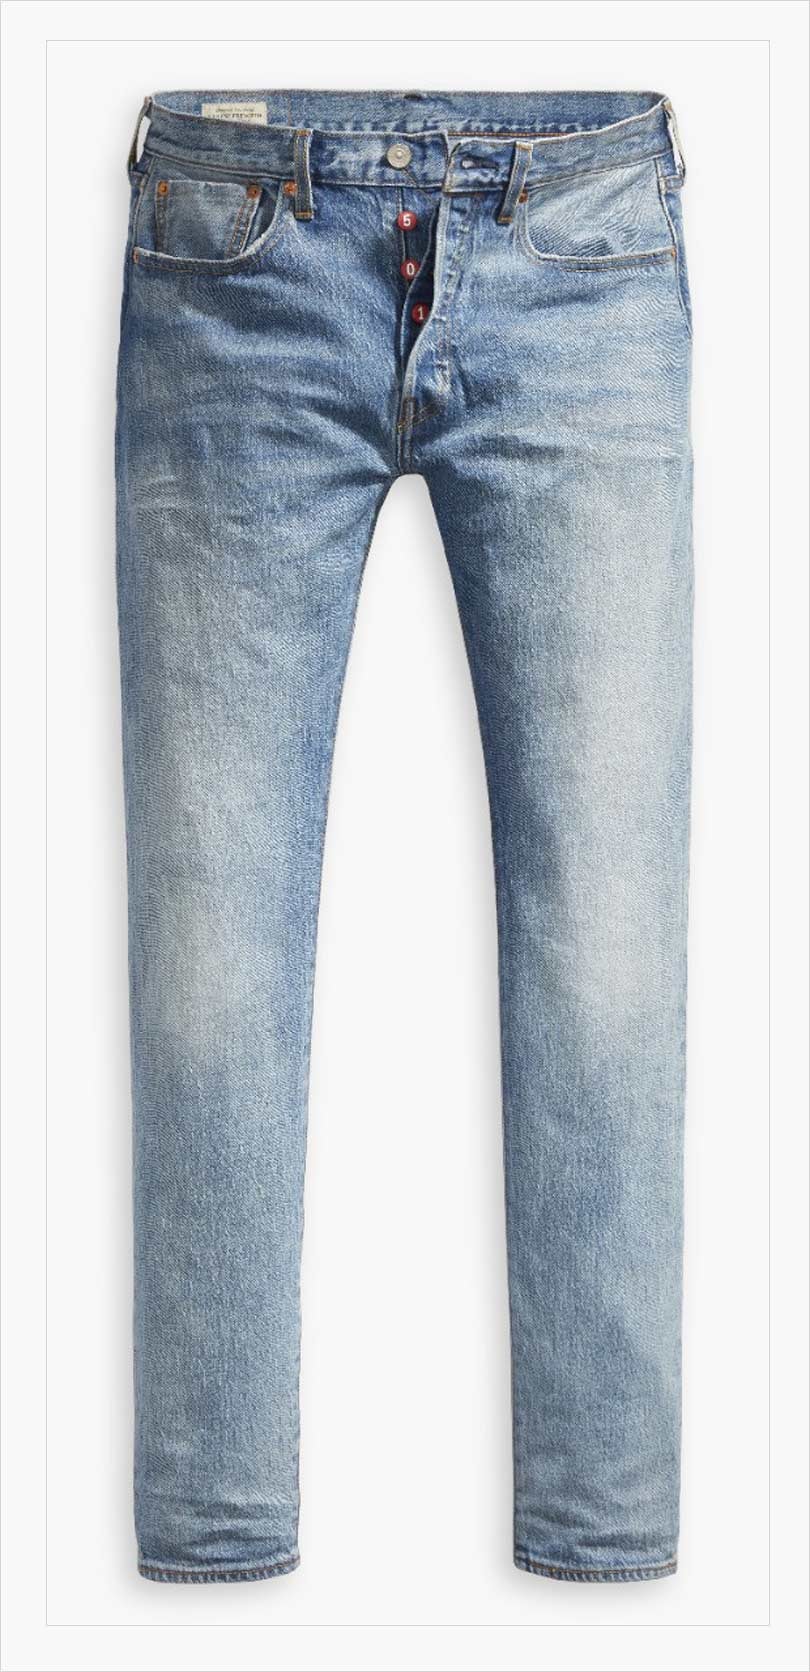 levis best selling jeans